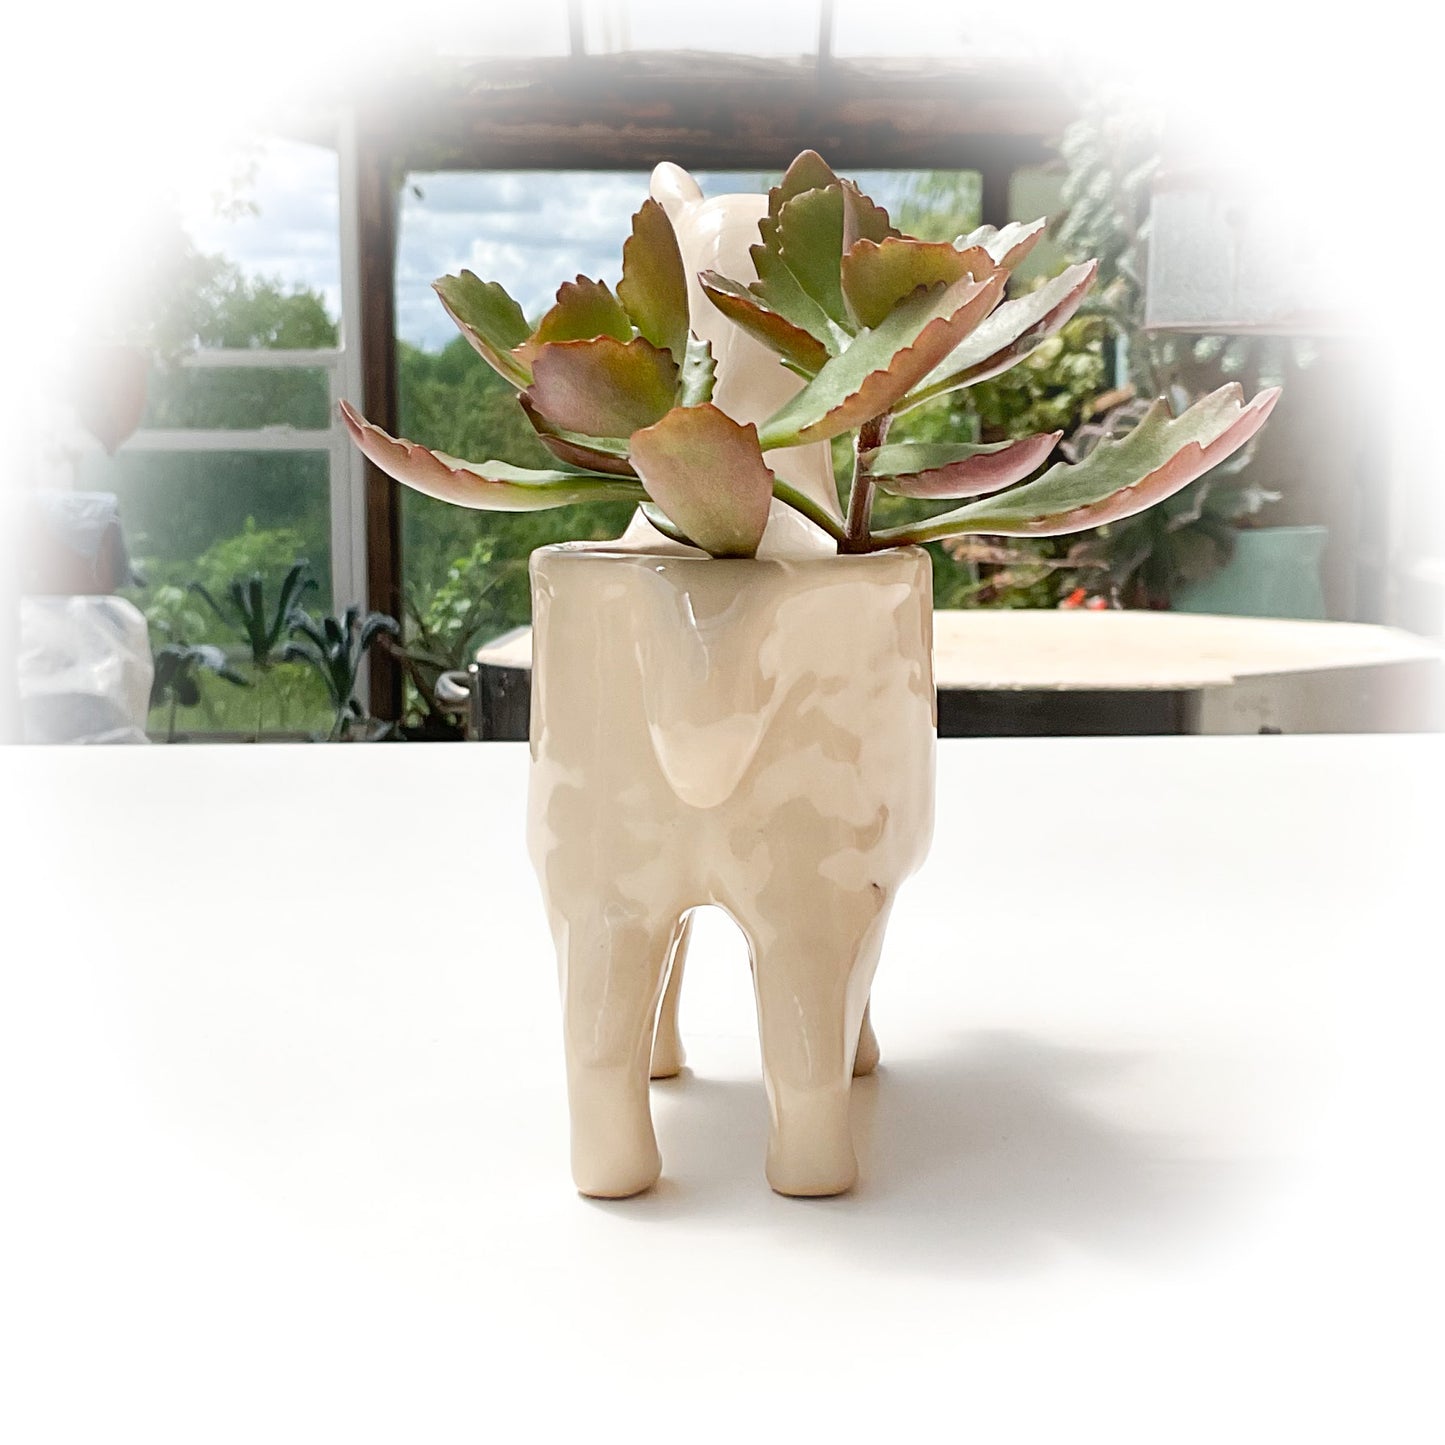 Beige Alpaca Pot - Ceramic Alpaca Planter